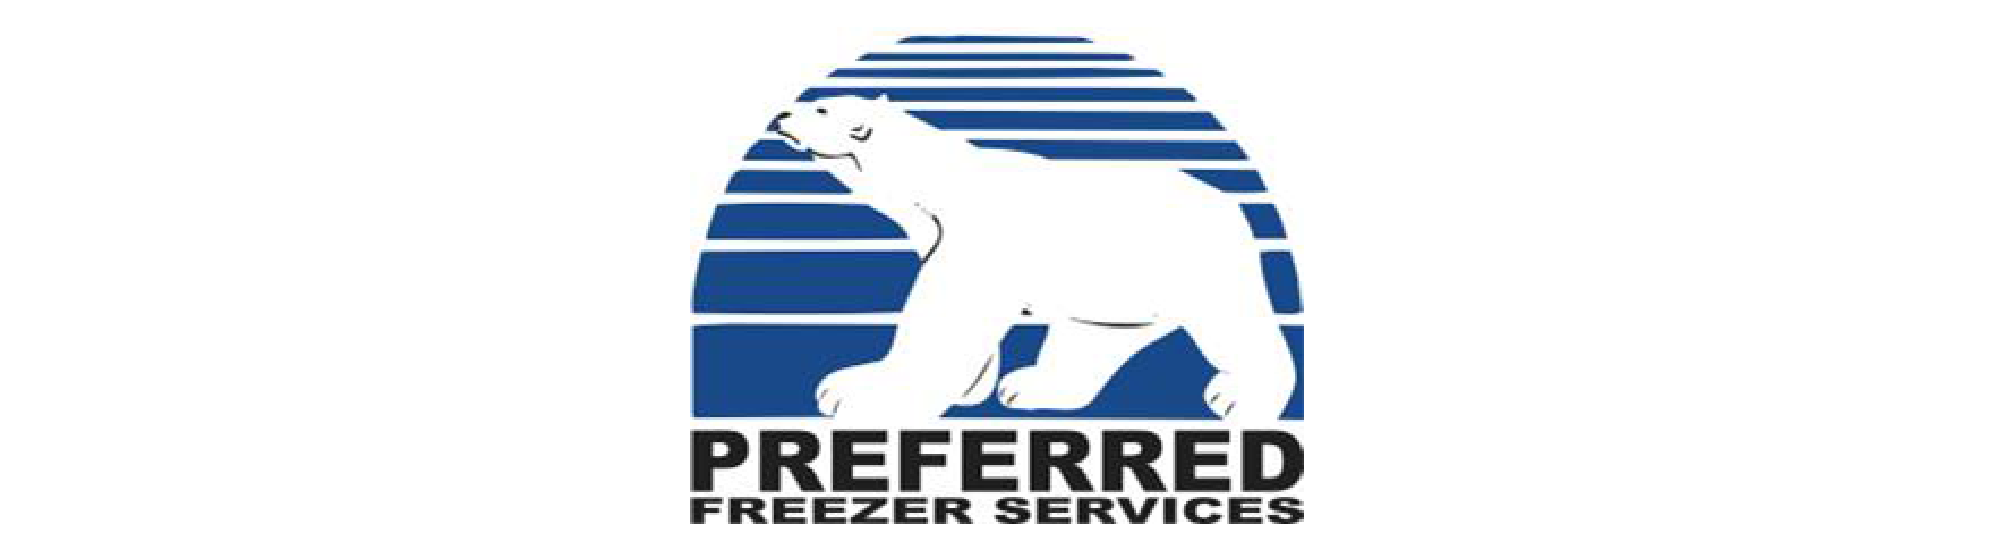 preferred-freezer